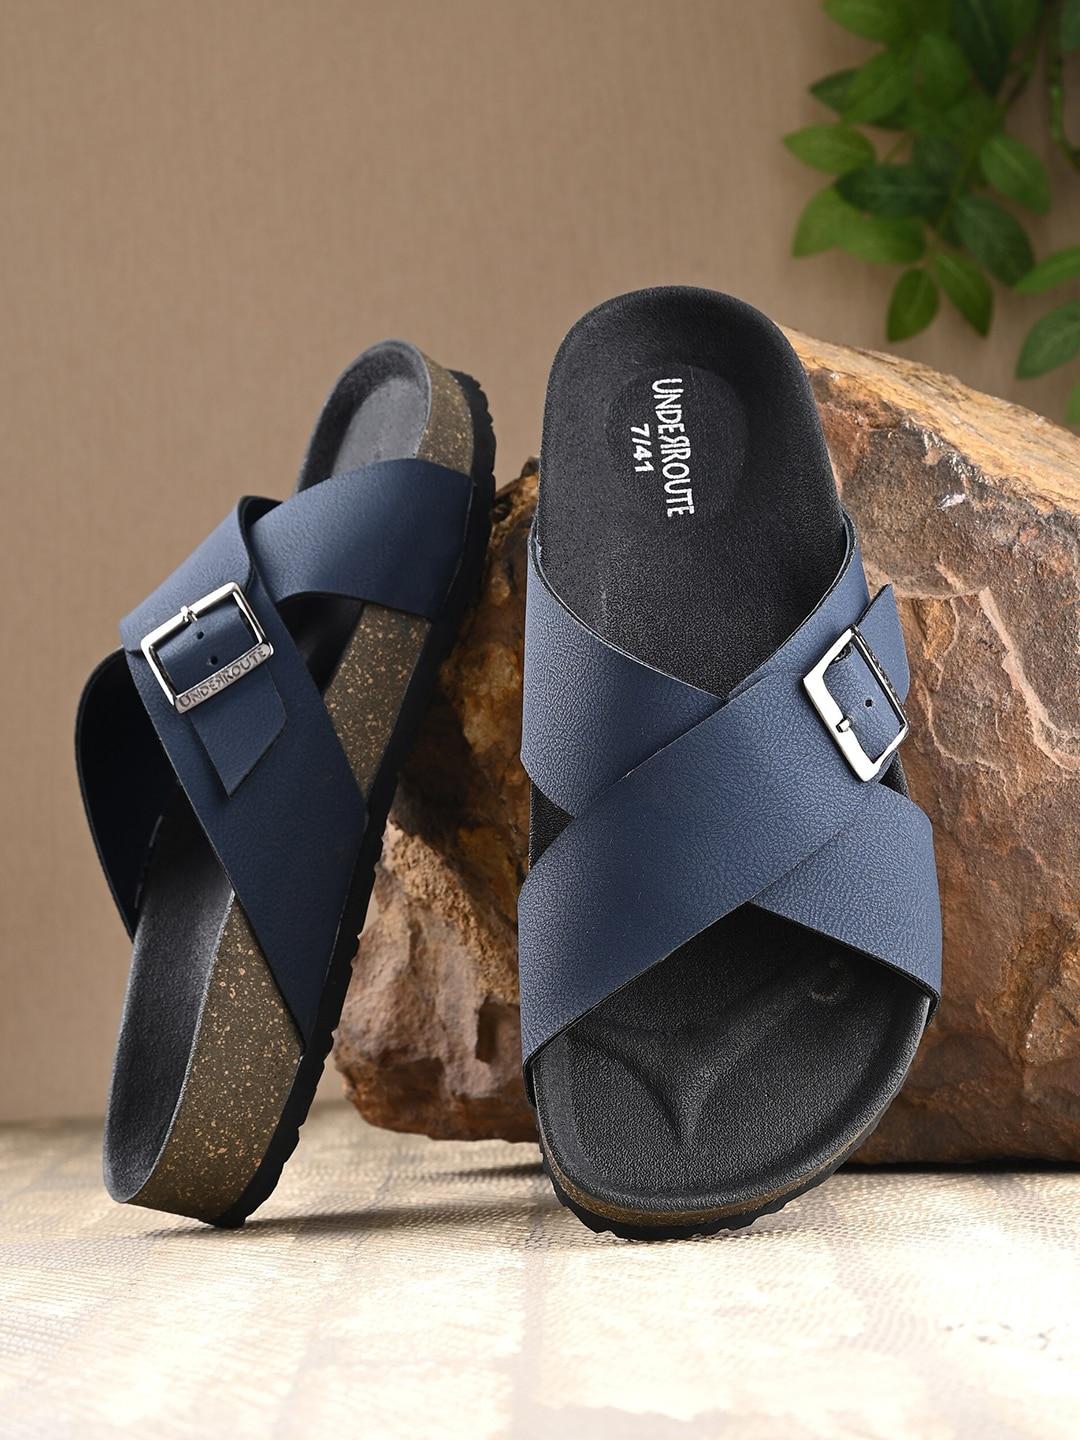 underroute-men-cross-strap-comfort-sandals-with-buckle-detail